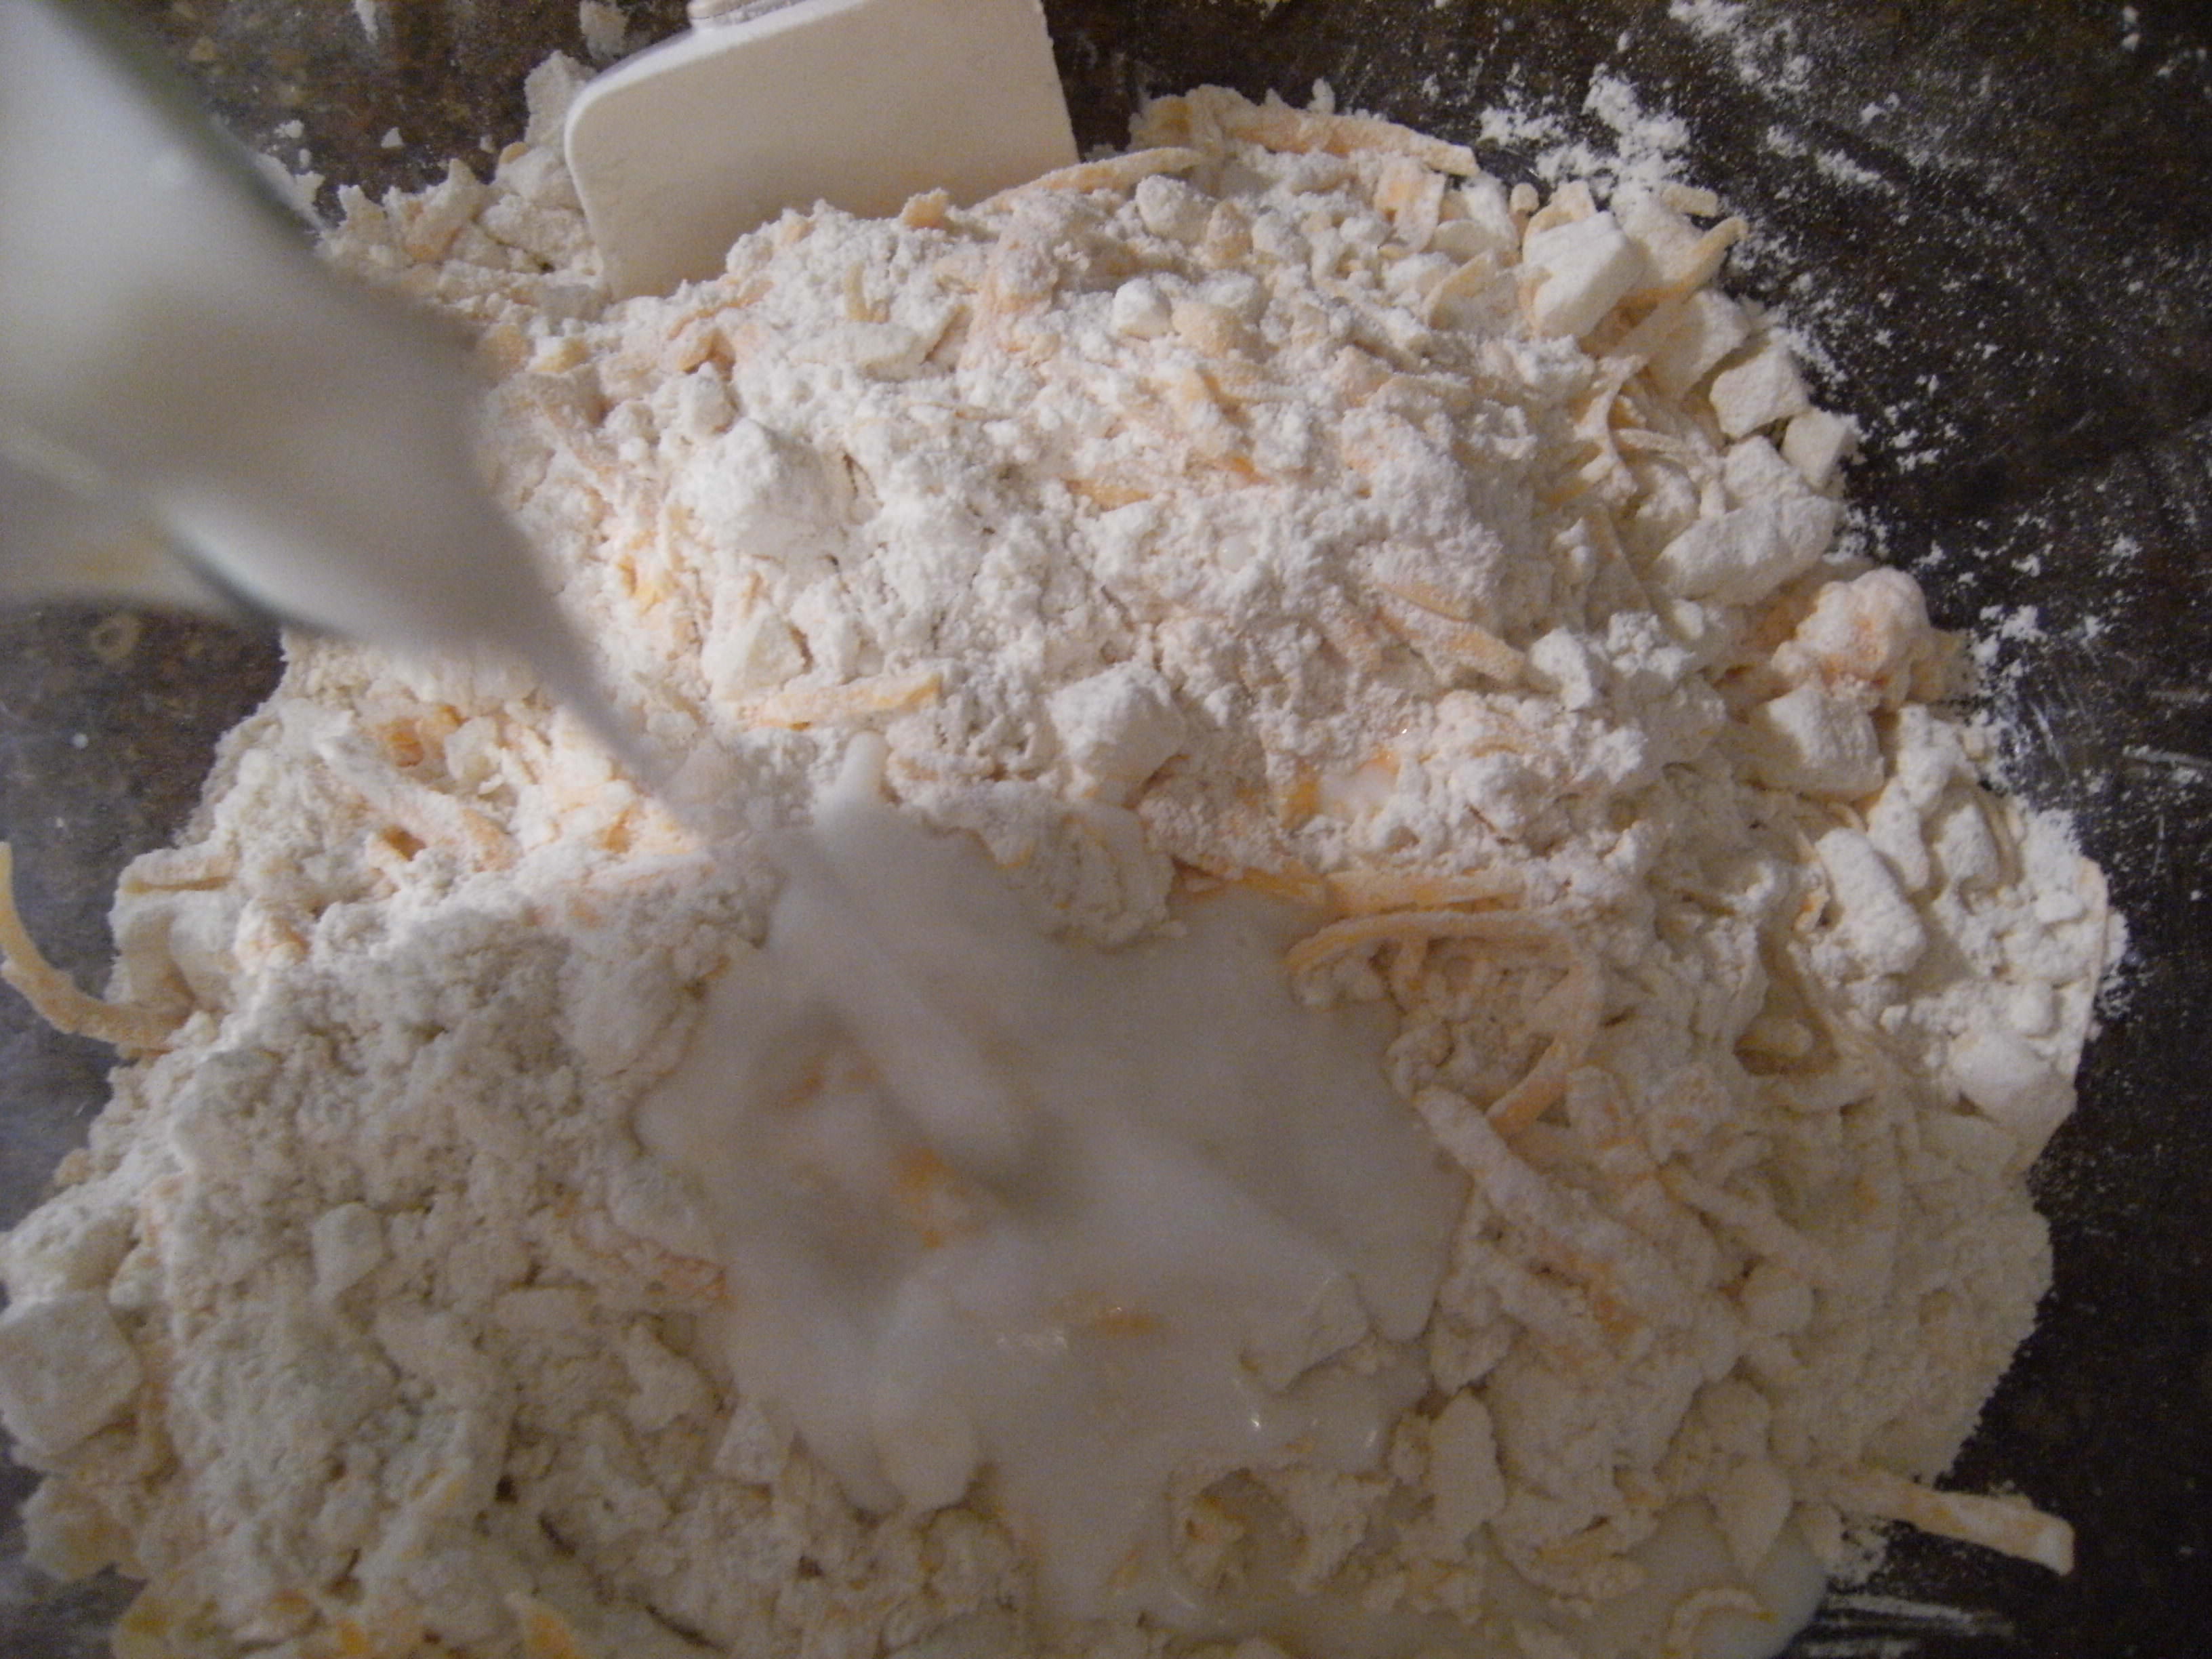 combining wet ingredients with dry ingredients to make scones